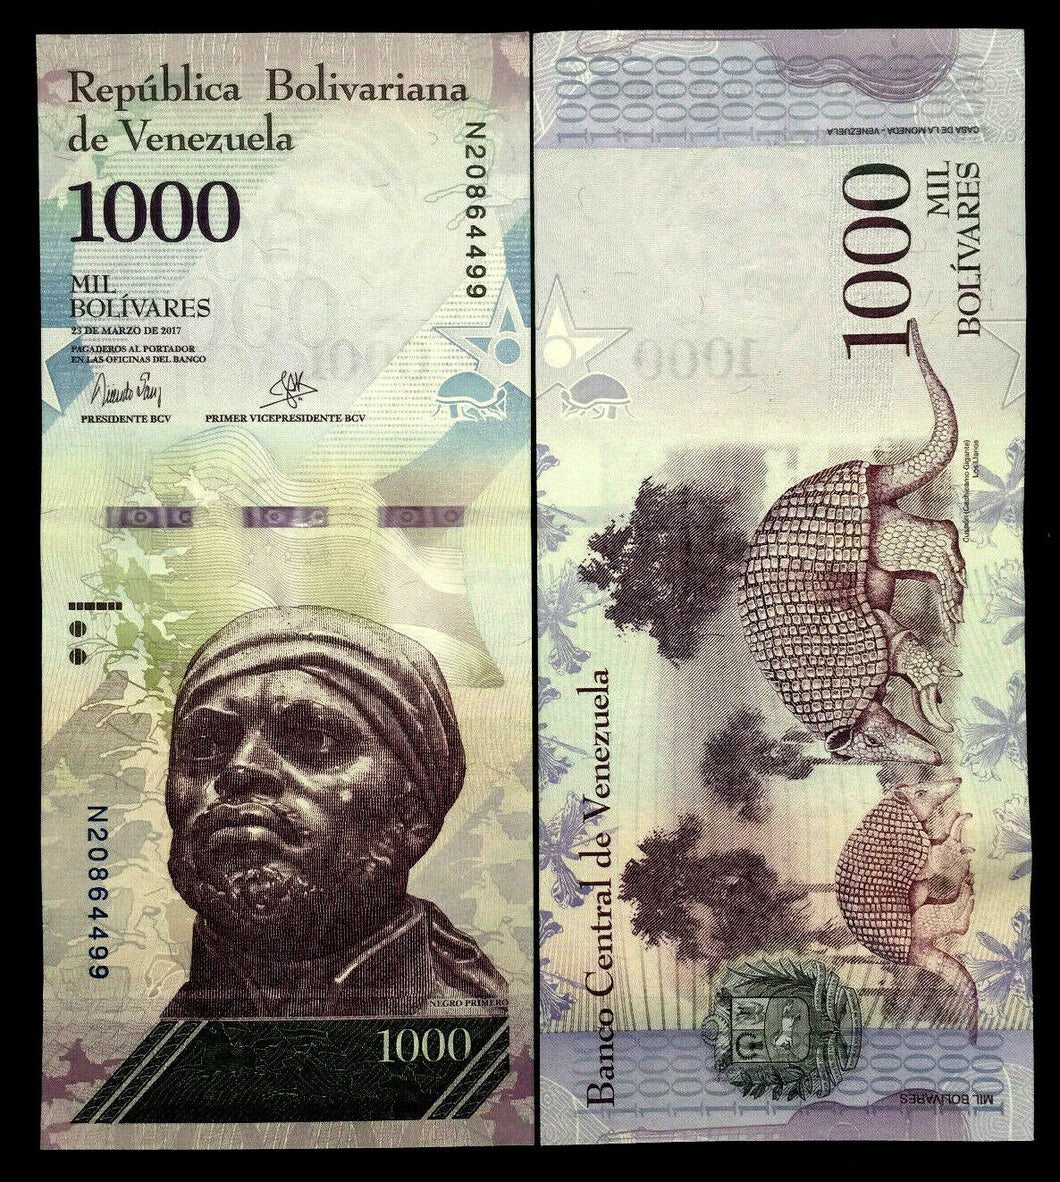 VENEZUELA 1000 Bolivar 2017 World Paper Money UNC Currency Bill